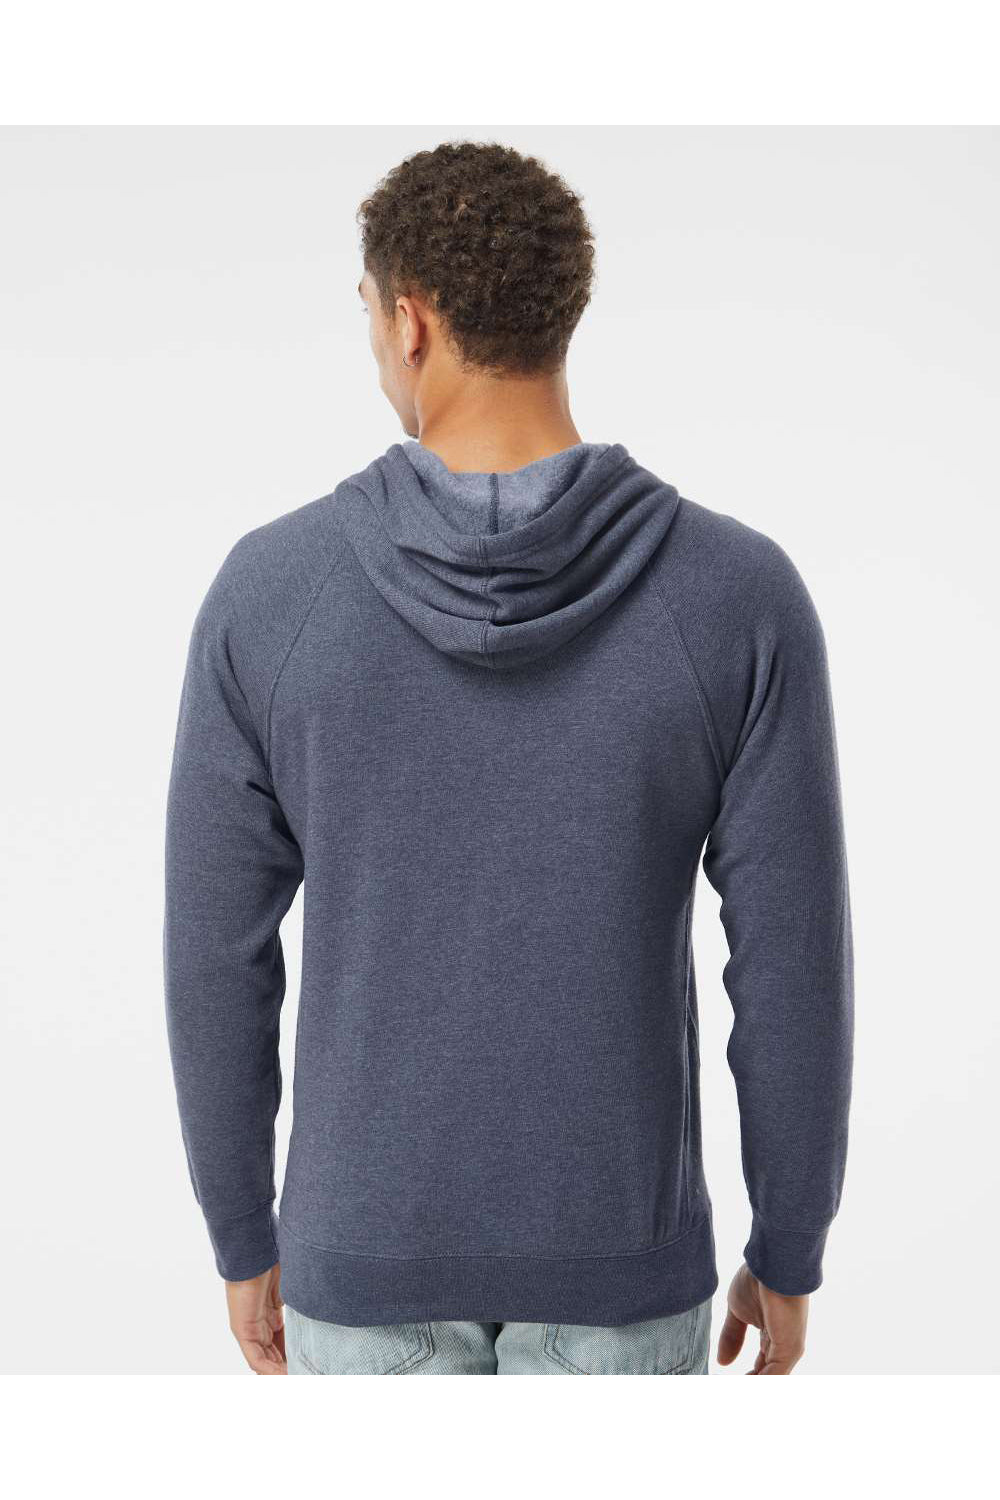 Independent Trading Co. PRM33SBP Mens Special Blend Raglan Hooded Sweatshirt Hoodie Midnight Navy Blue Model Back